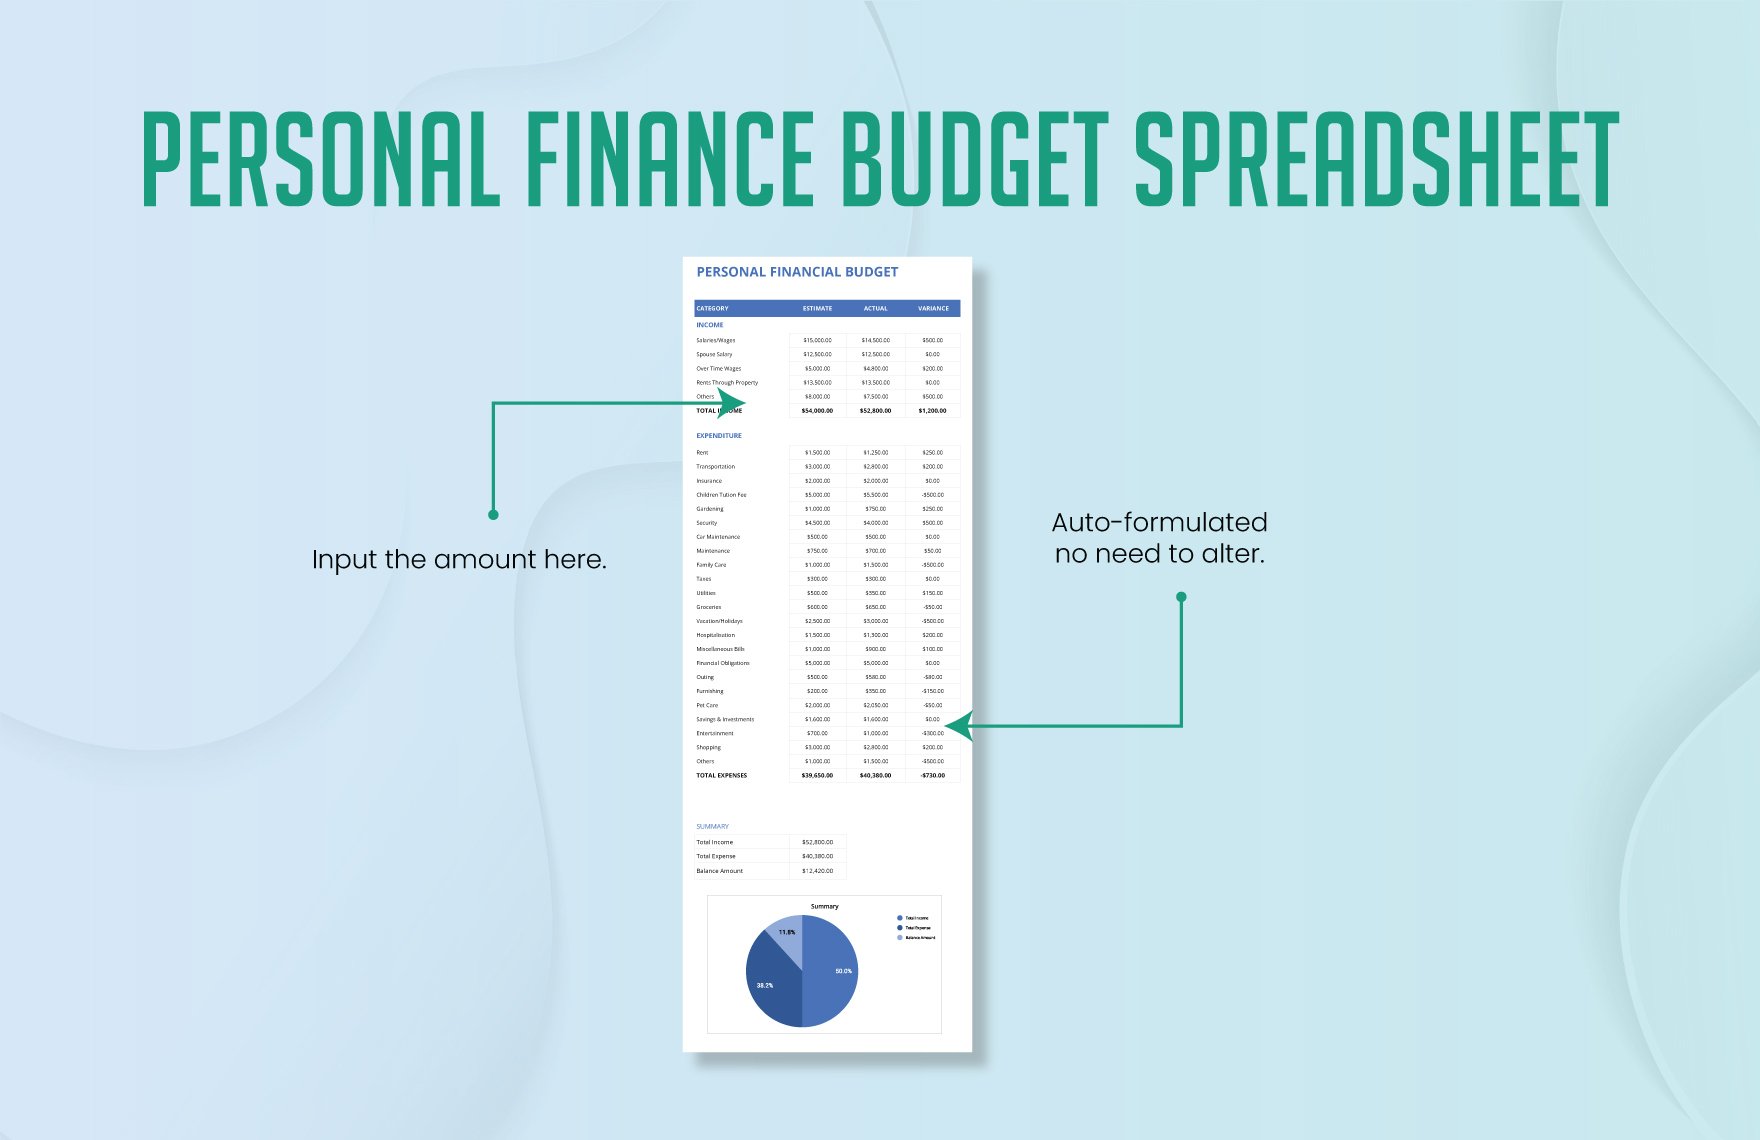 Personal Finance Budget Spread Sheet Template